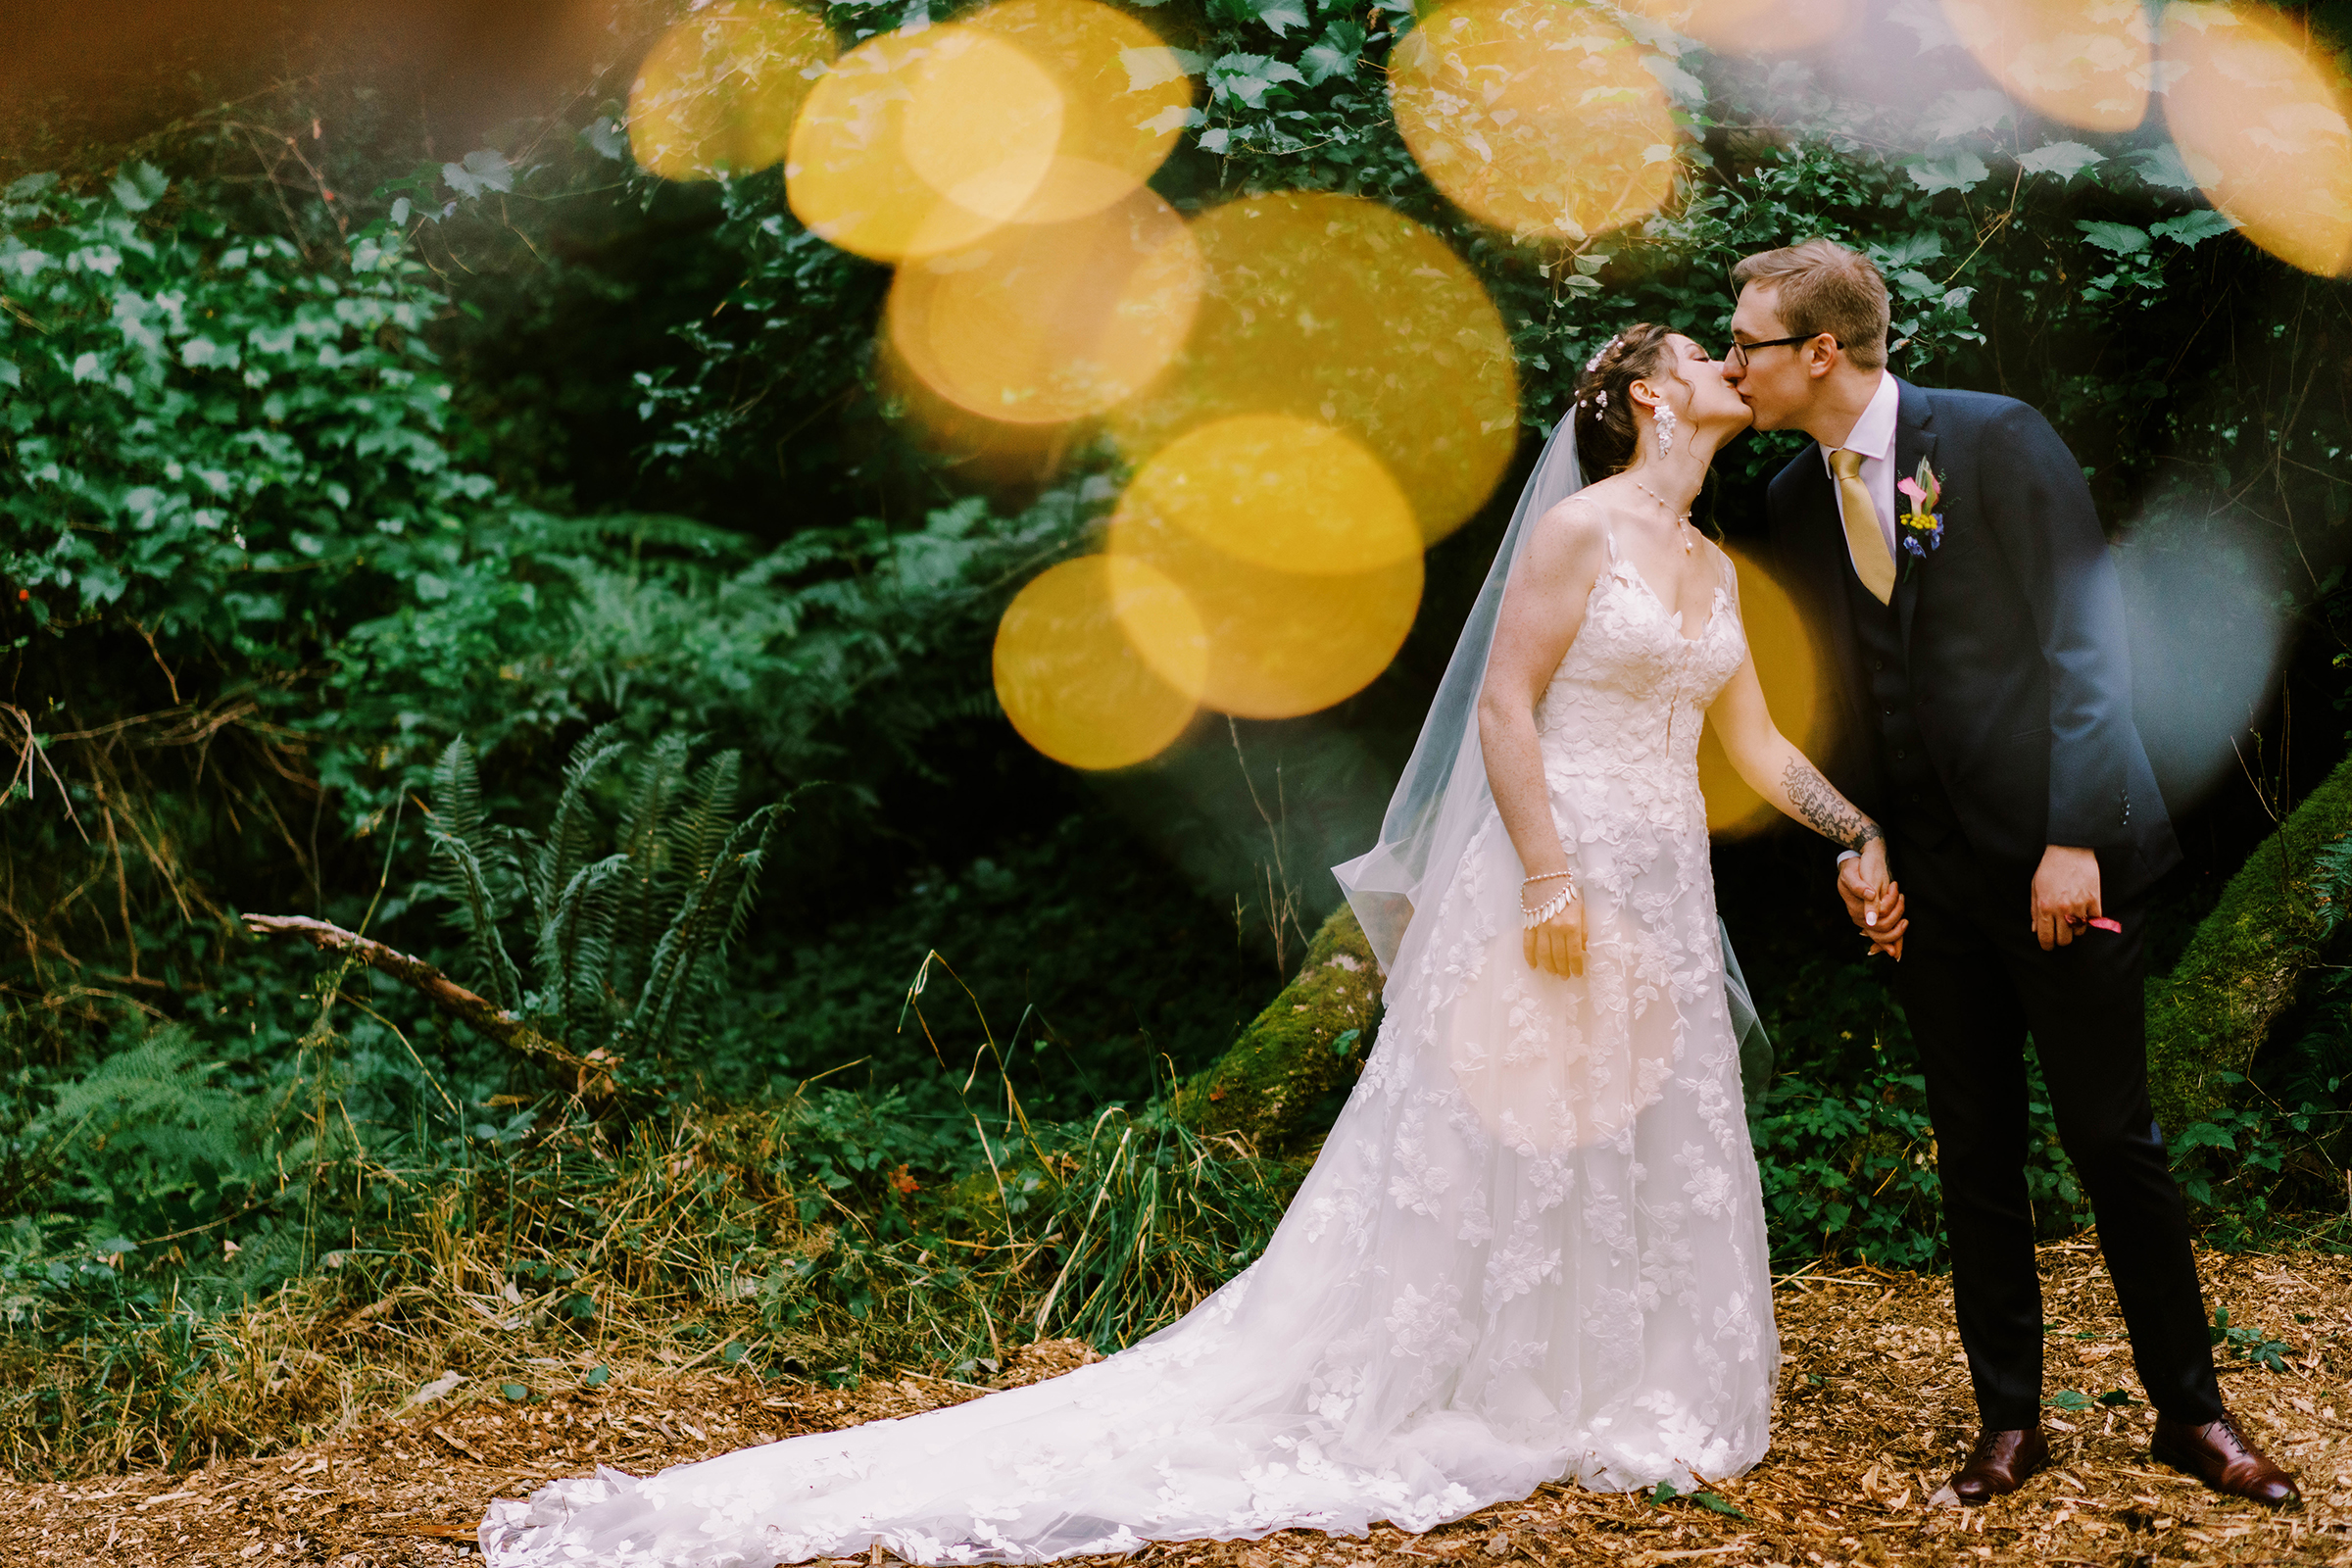 Annika and Sean wedding photos at their intimate backyard wedding